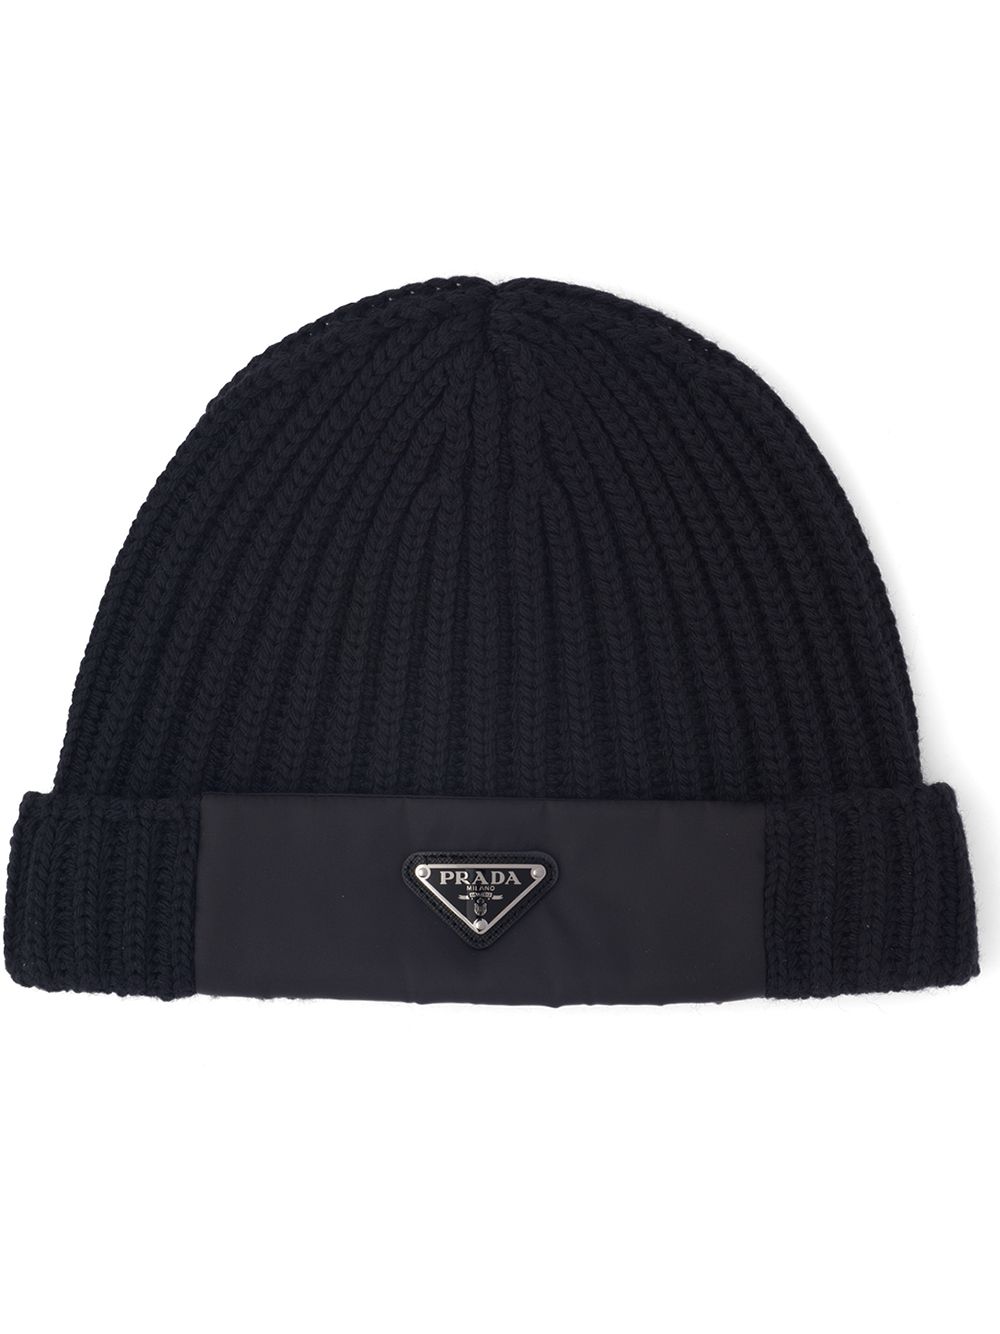 Image 1 of Prada Re-Nylon knitted hat